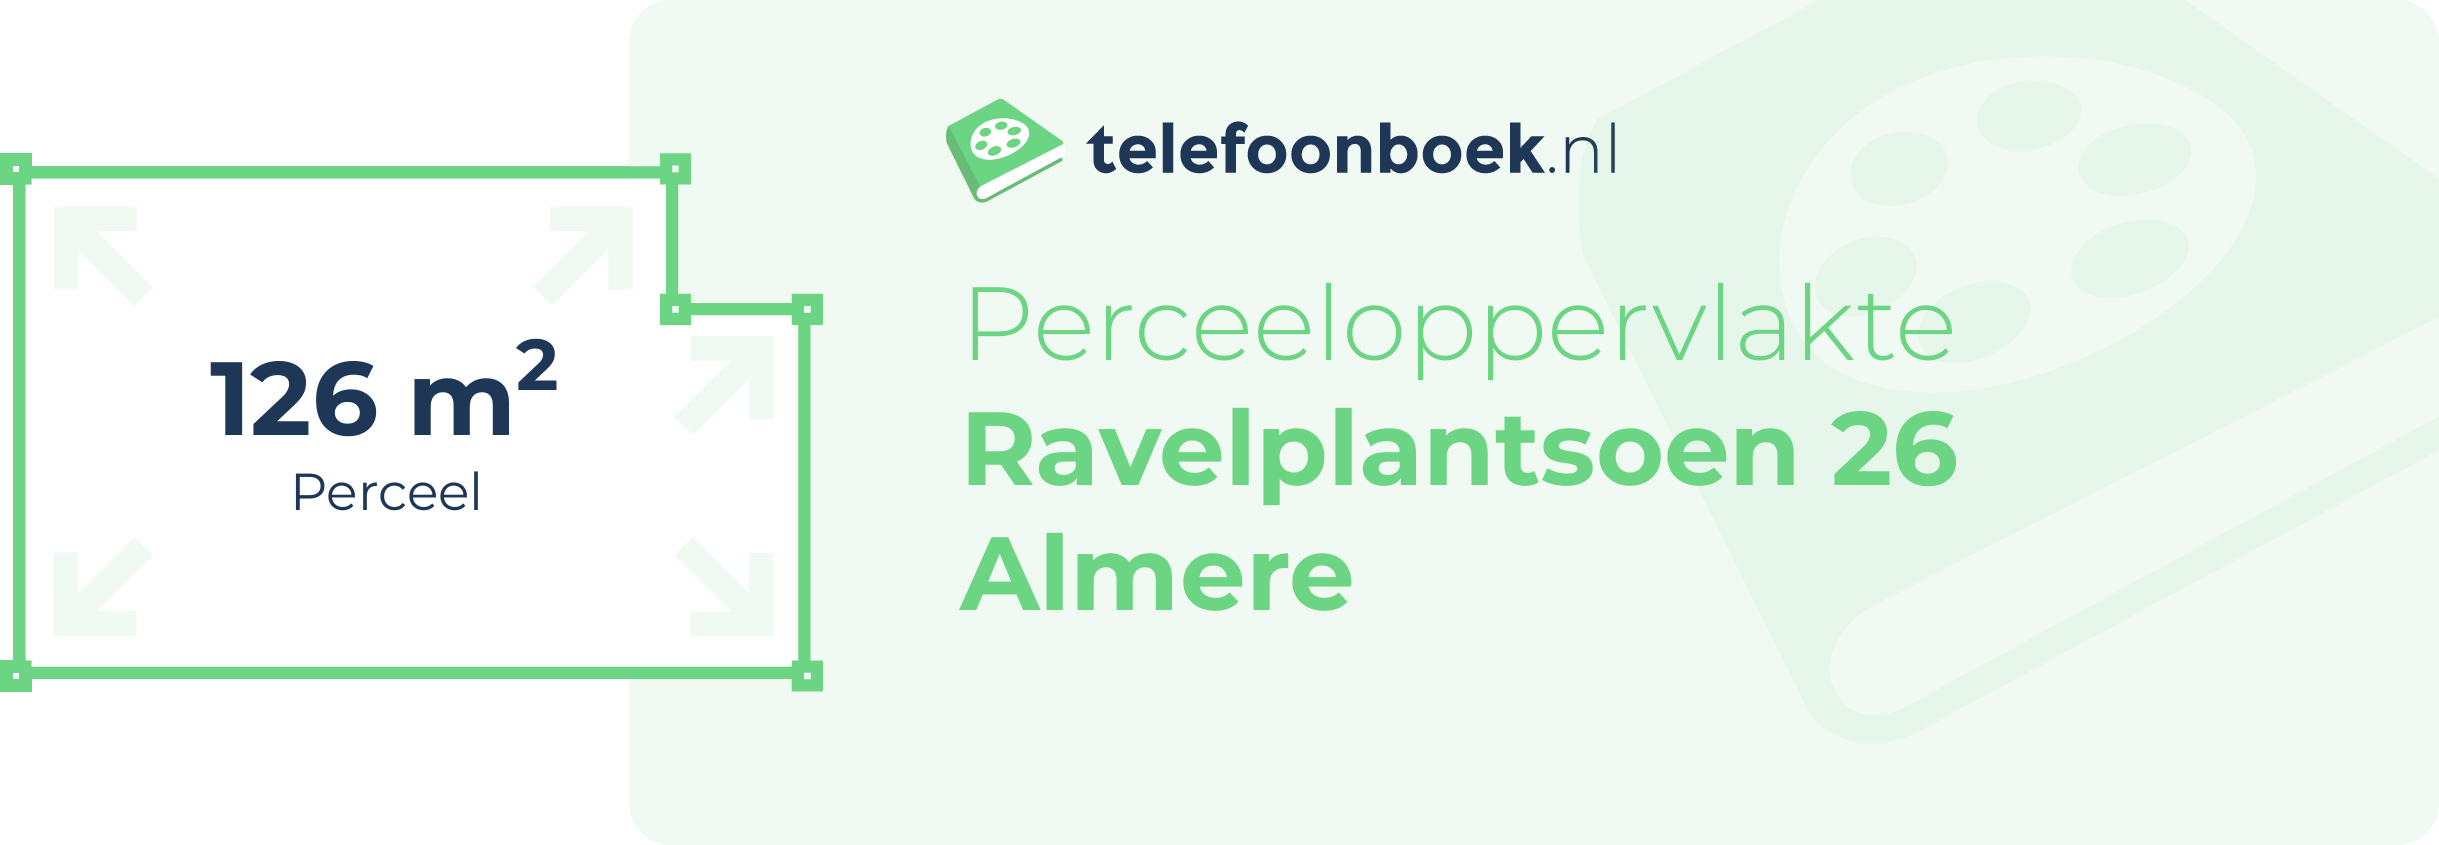 Perceeloppervlakte Ravelplantsoen 26 Almere